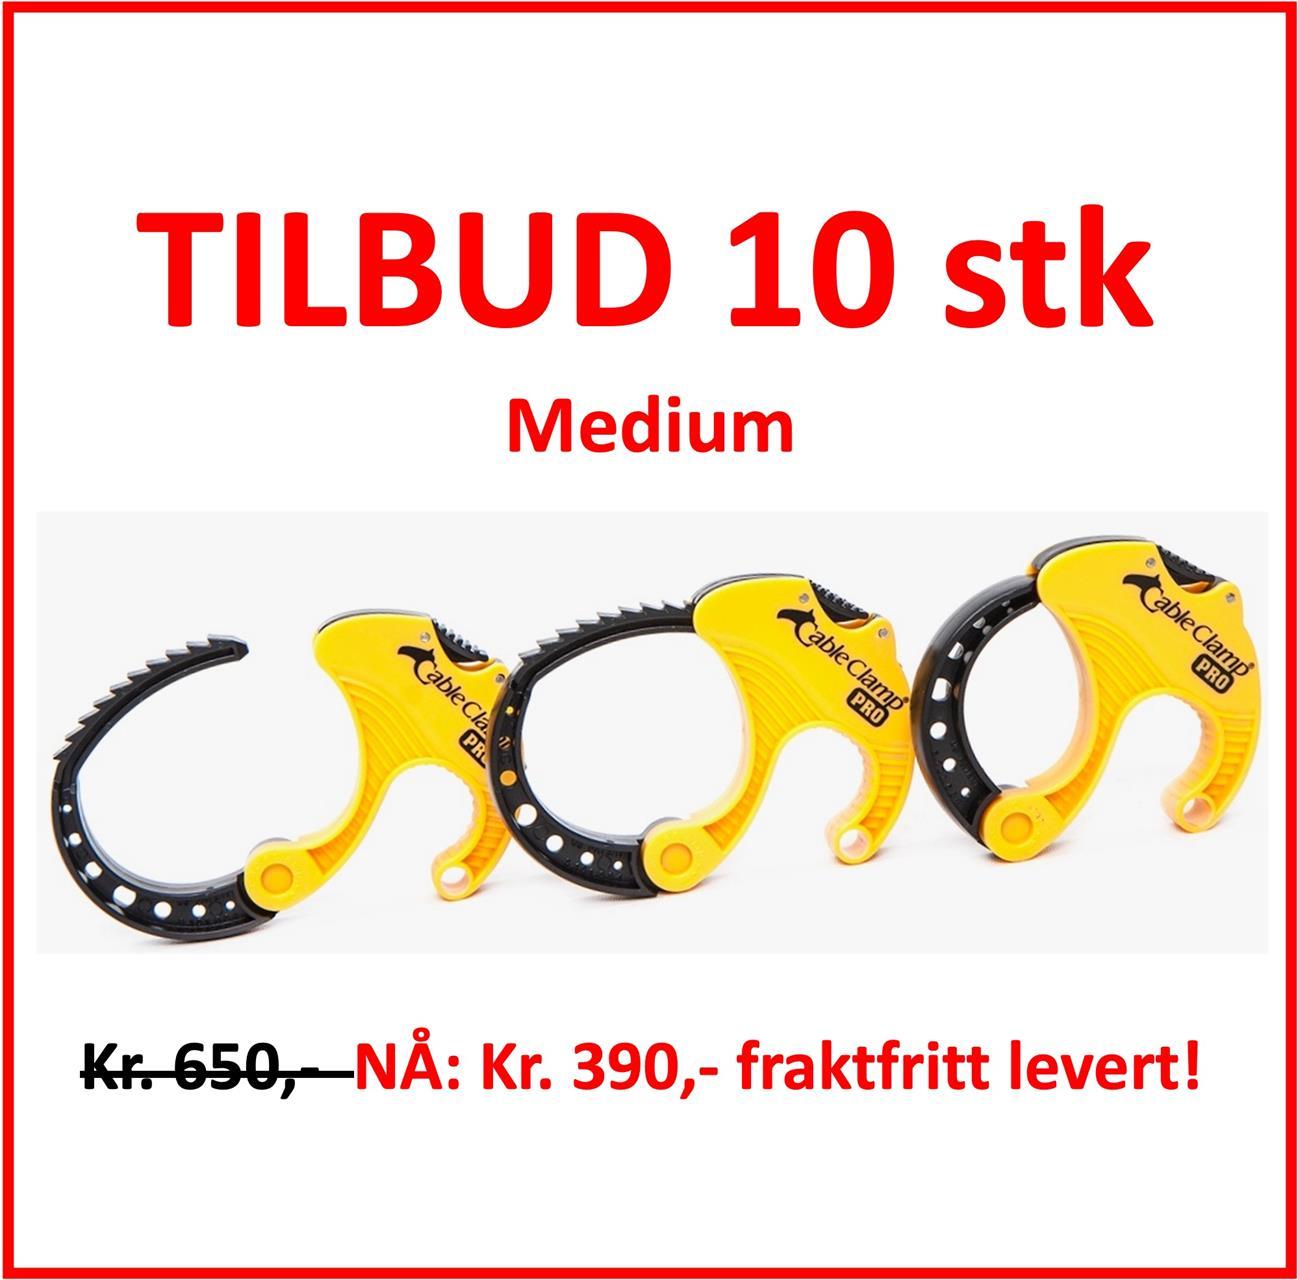 Tilbud 10 pk Medium